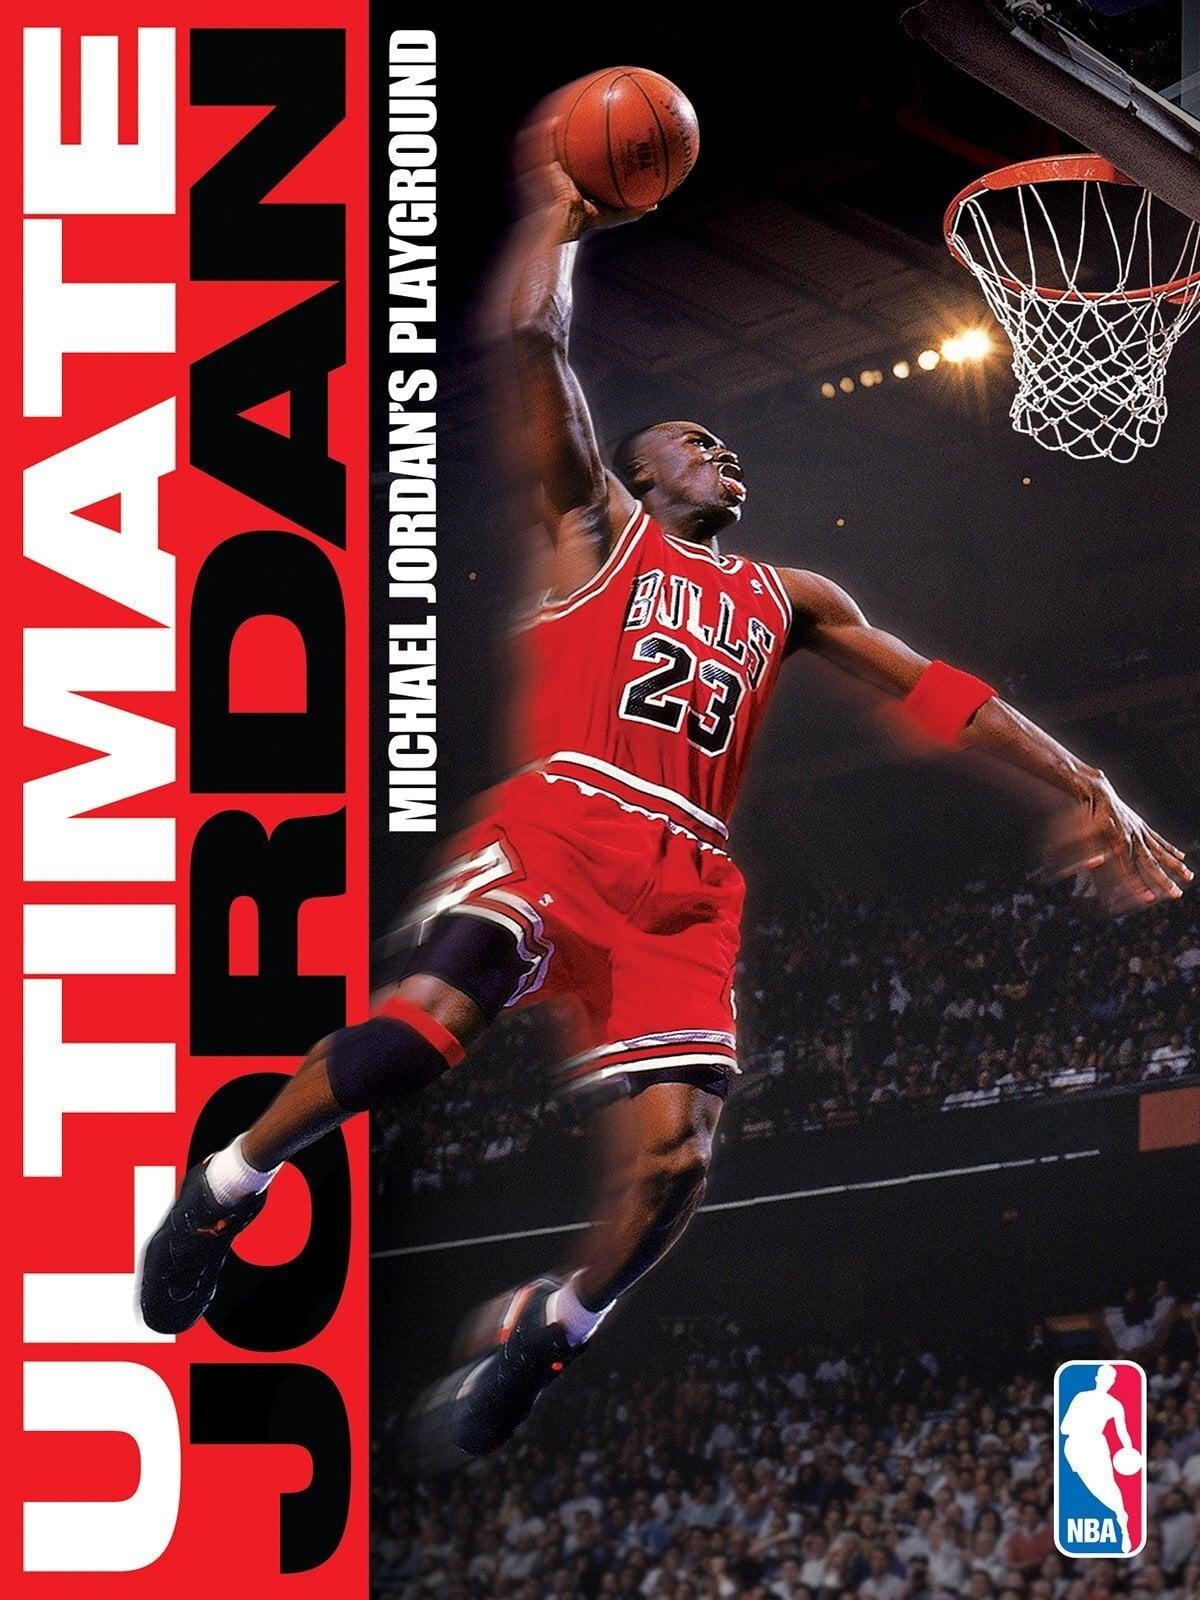 Michael Jordan's Playground poster